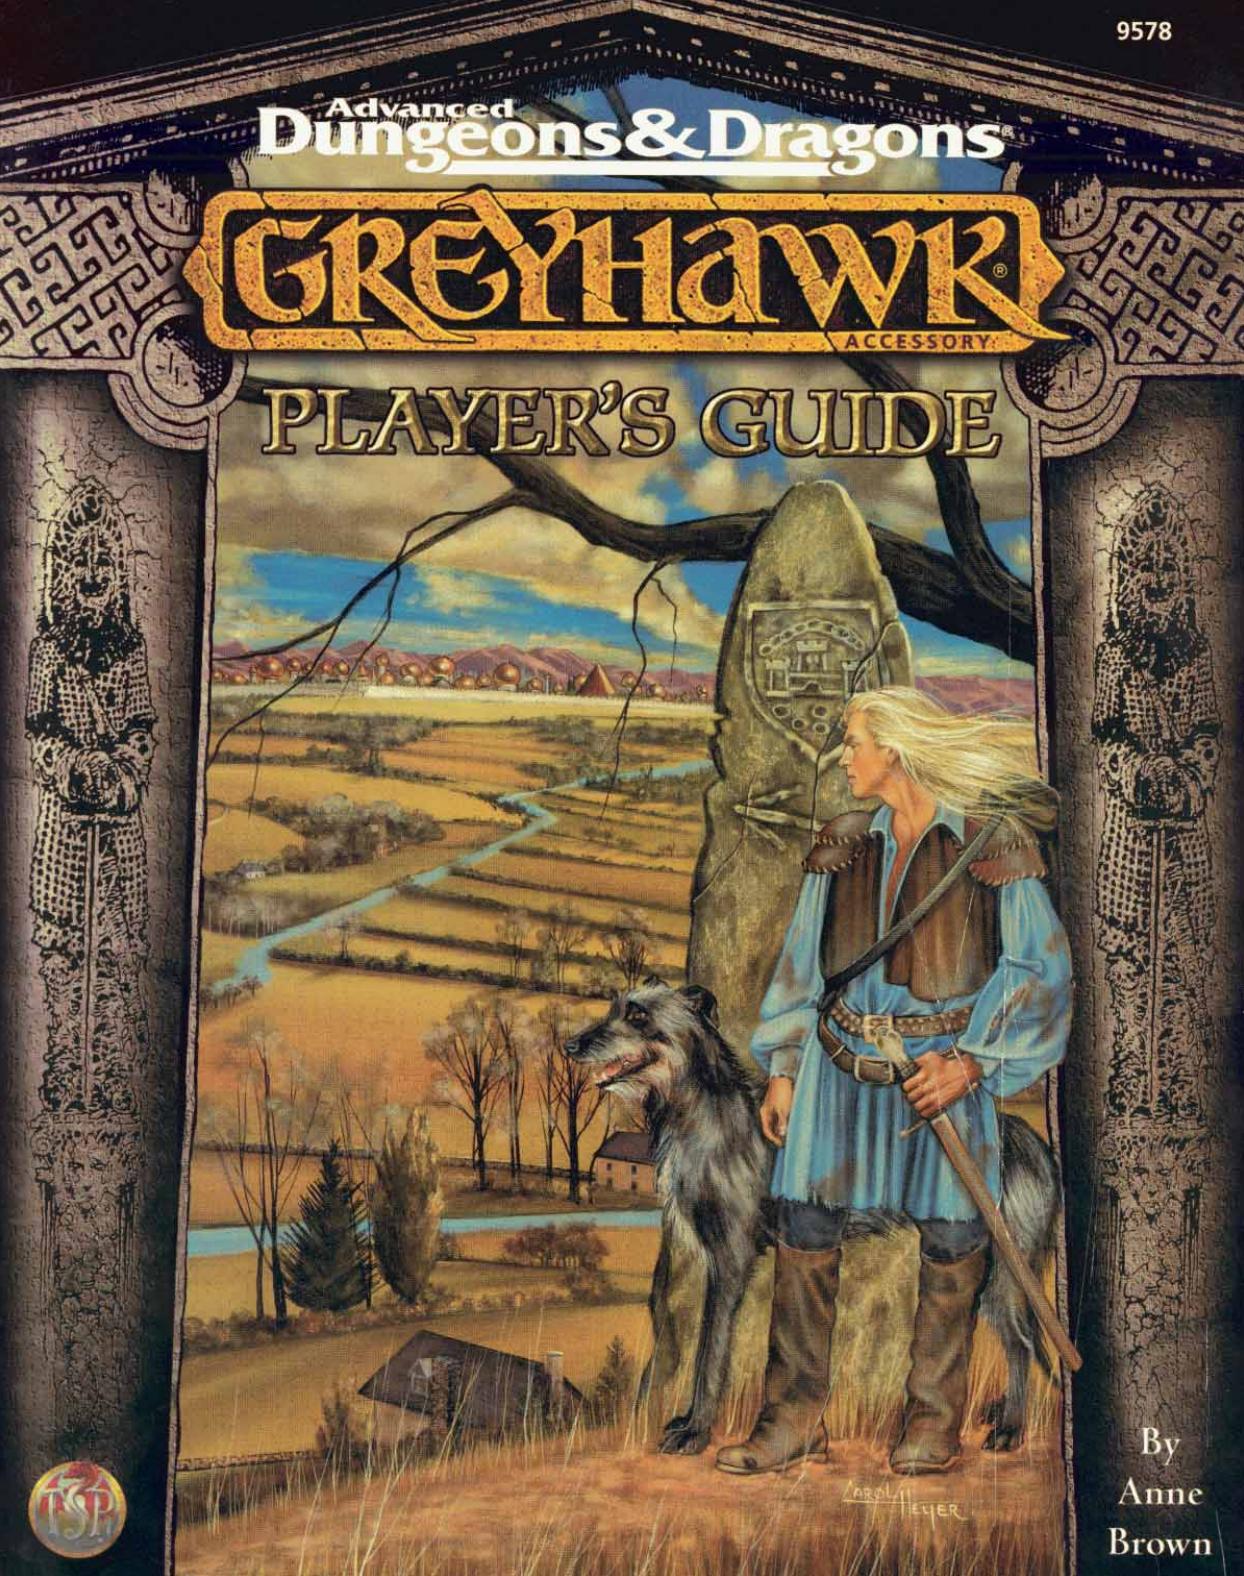 Greyhawk Player's Guide